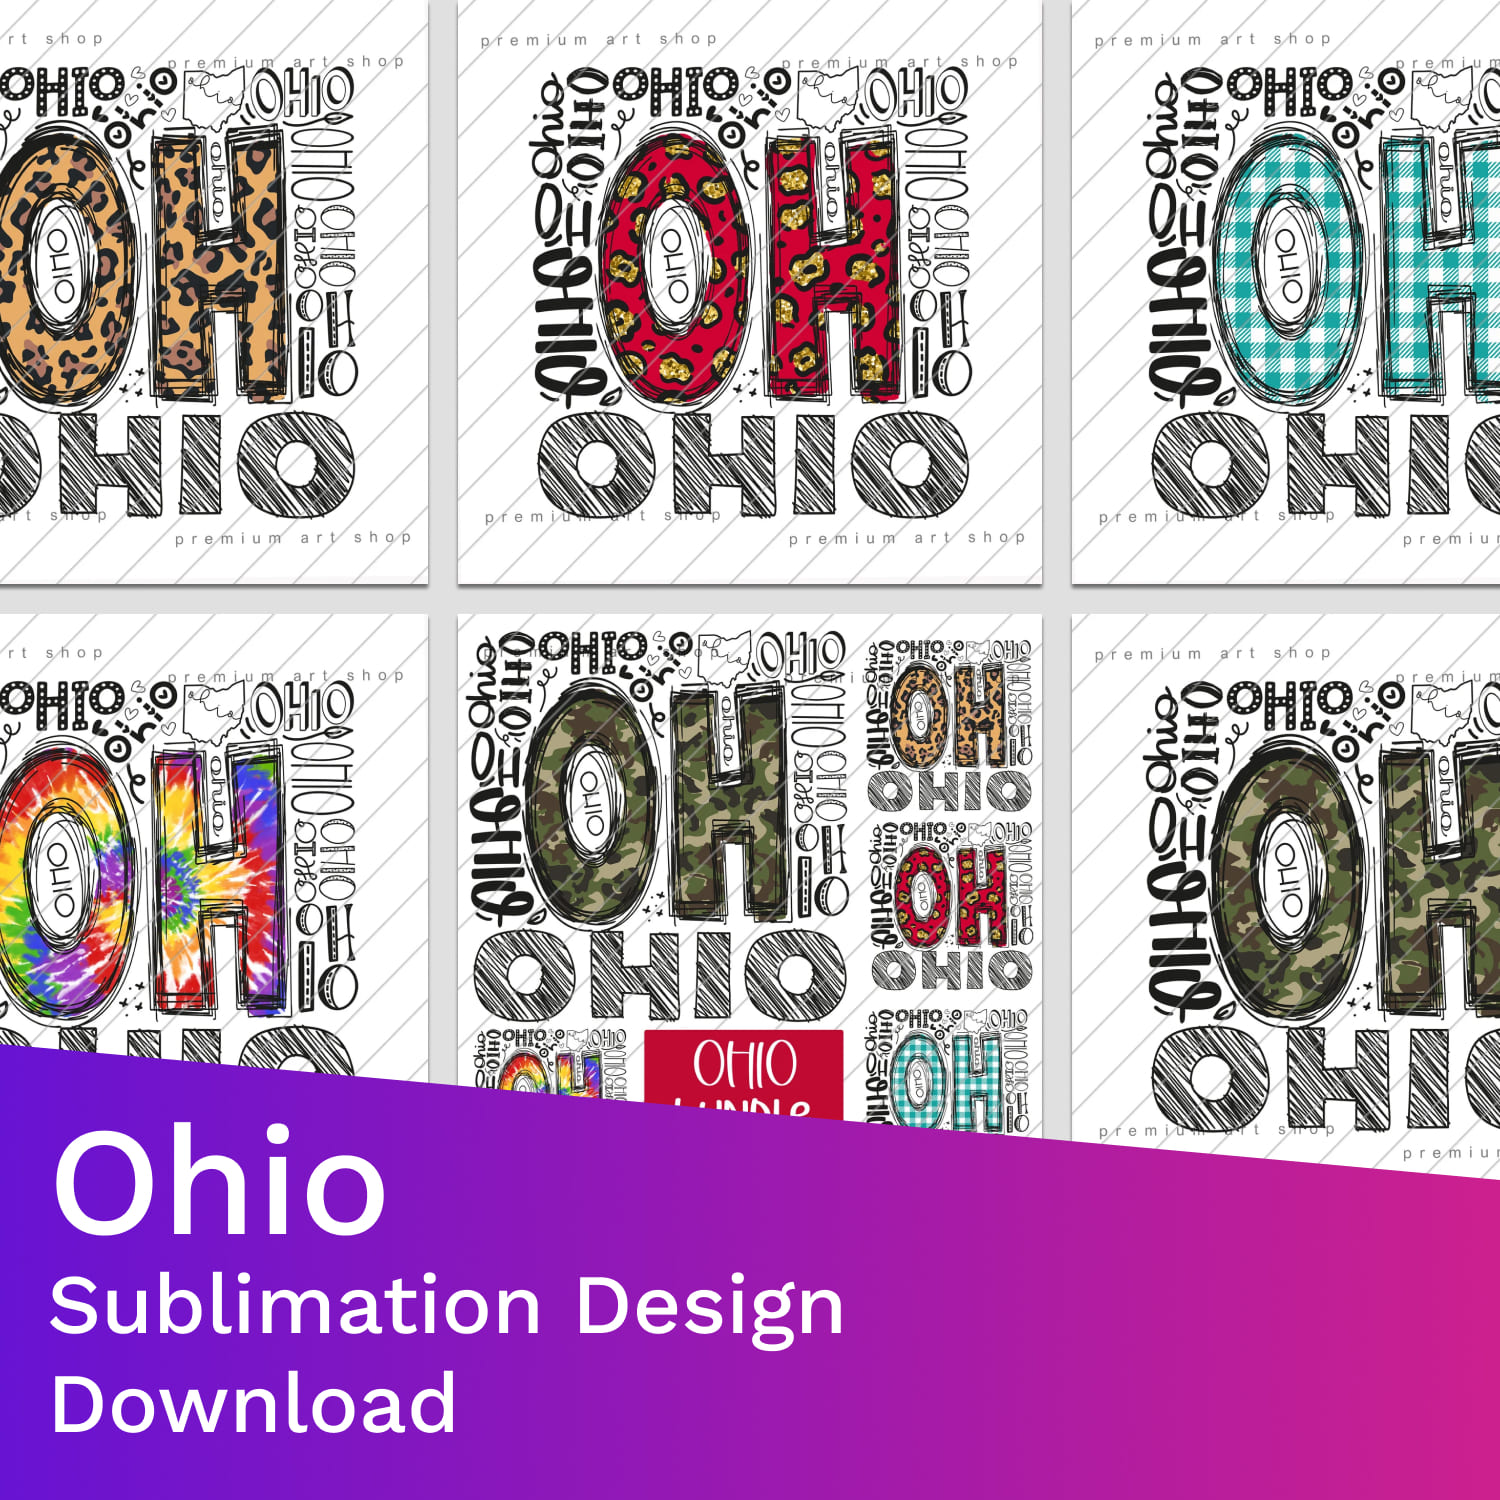 Ohio Sublimation Design Download.